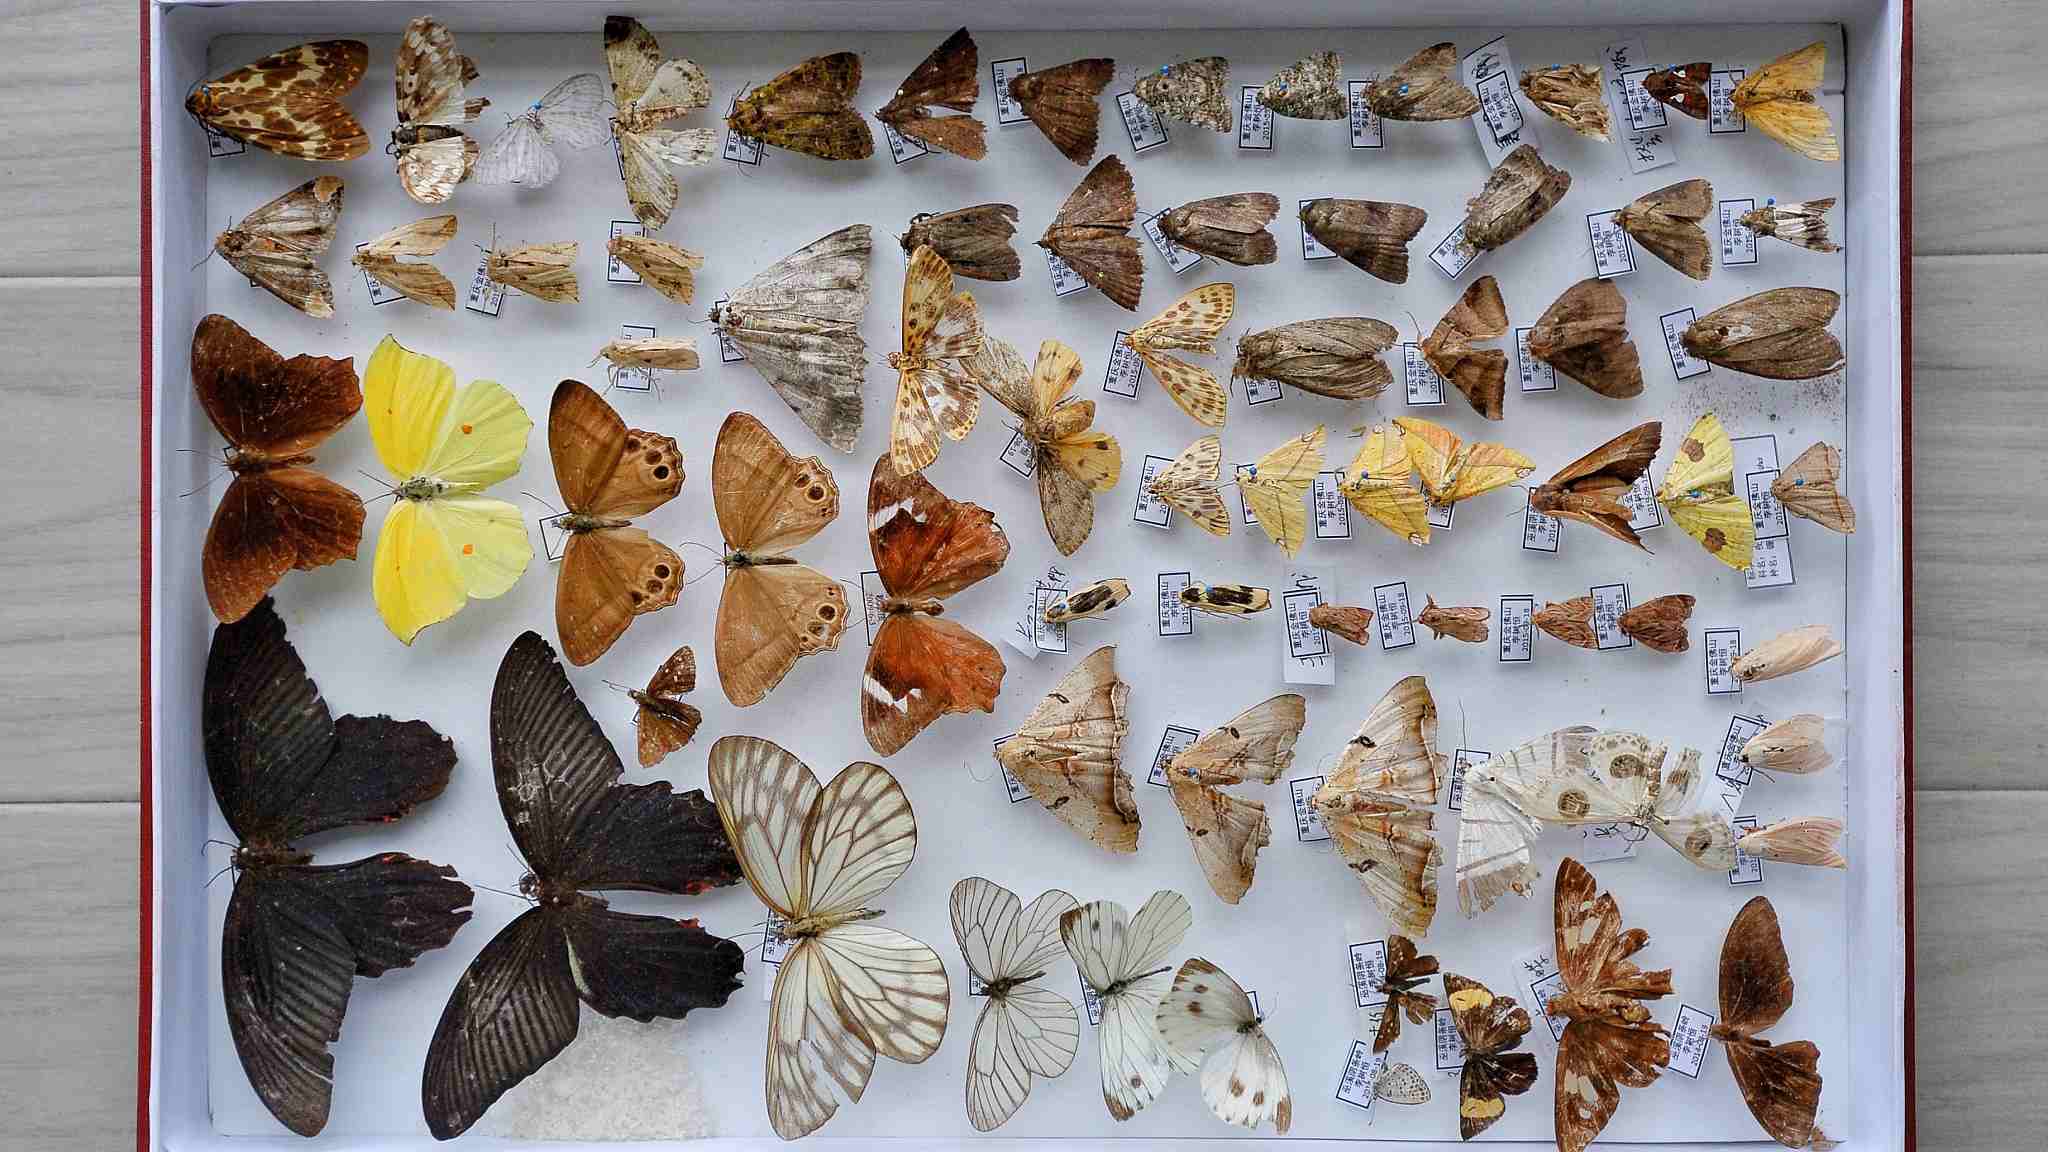 Insect Specimen Transparent Resin Biological Specimens ZLF Butterfly Growth History Specimen for Teaching Instrument Biological Model